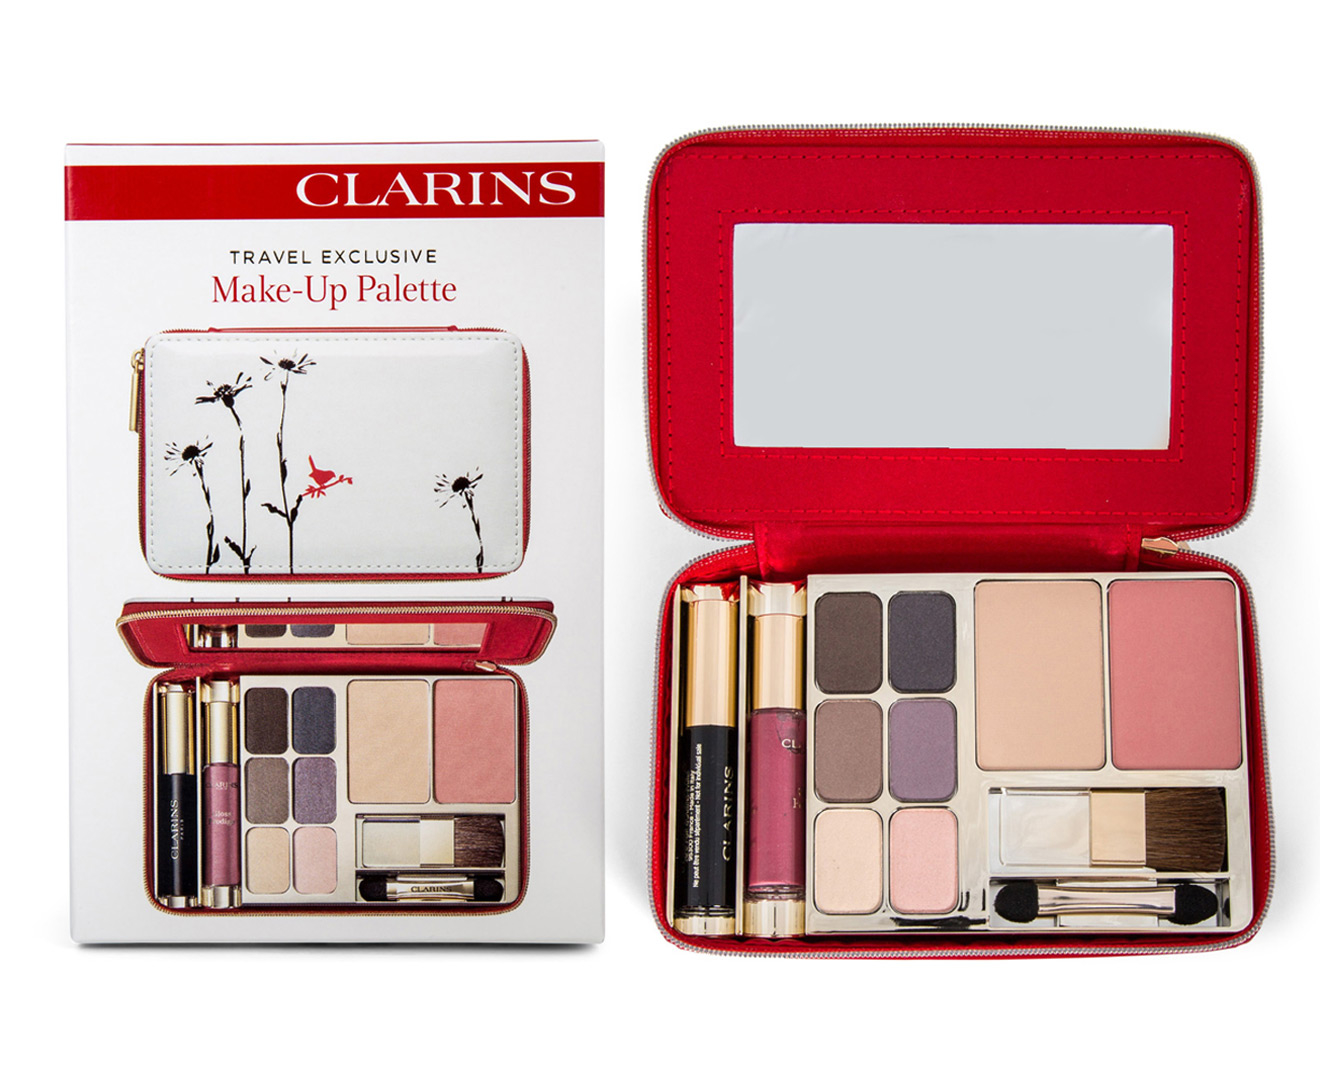 Clarins Travel Exclusive Makeup Palette eBay